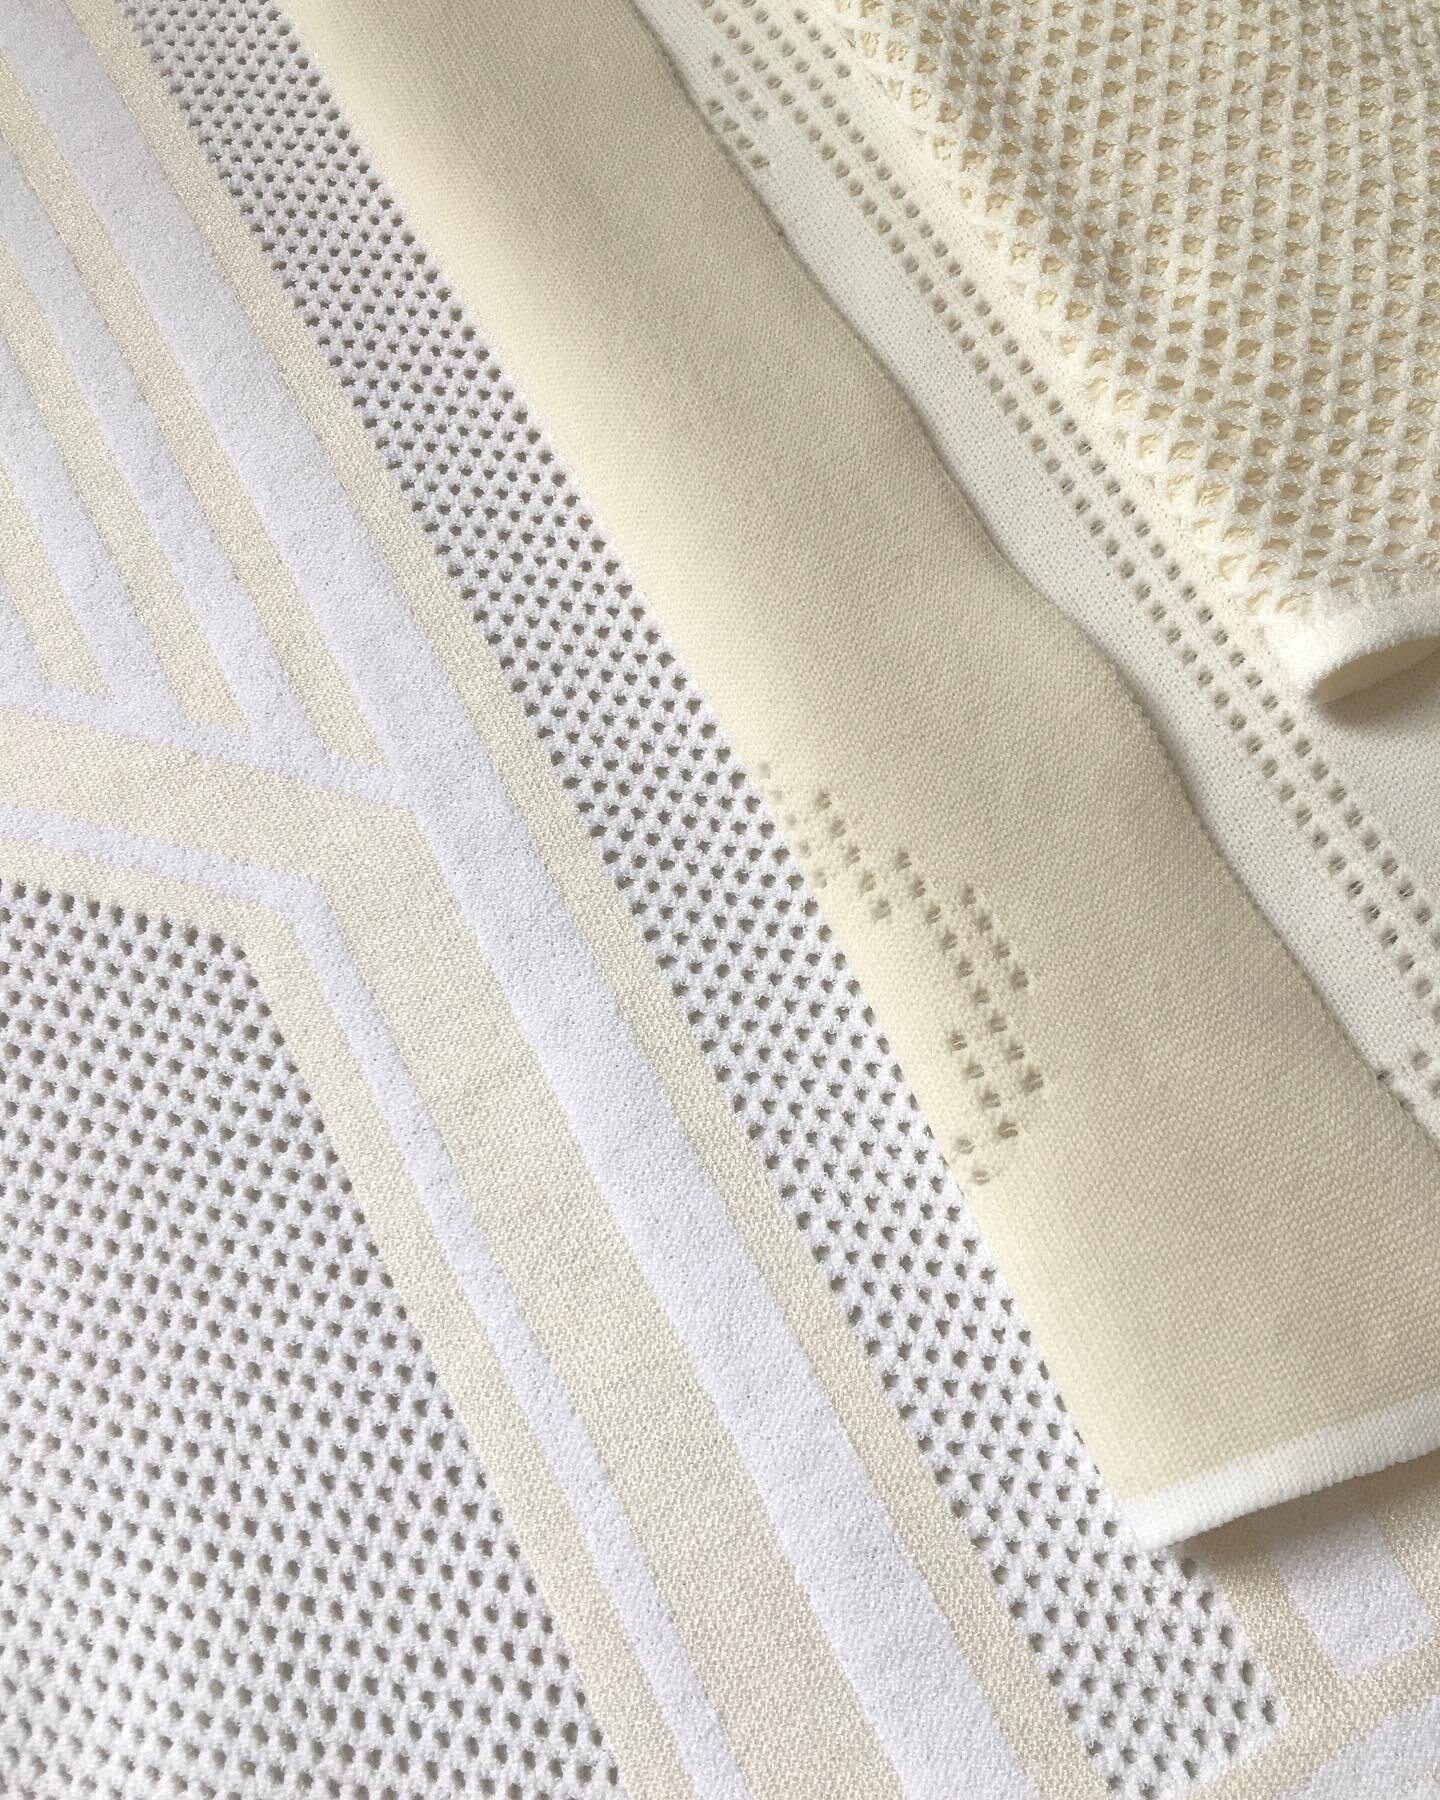 Sporty graphic stitches using SAWADA technical yarns. 🤺
Made by MRC

#knitwear
#shimaseiki
#mrcknitwear
#japaneseyarns
#madeinItaly
#innovation
#textiles
#technicaltextiles
#activewear
#sport
#mesh
#knitwearstudio
#knitlab